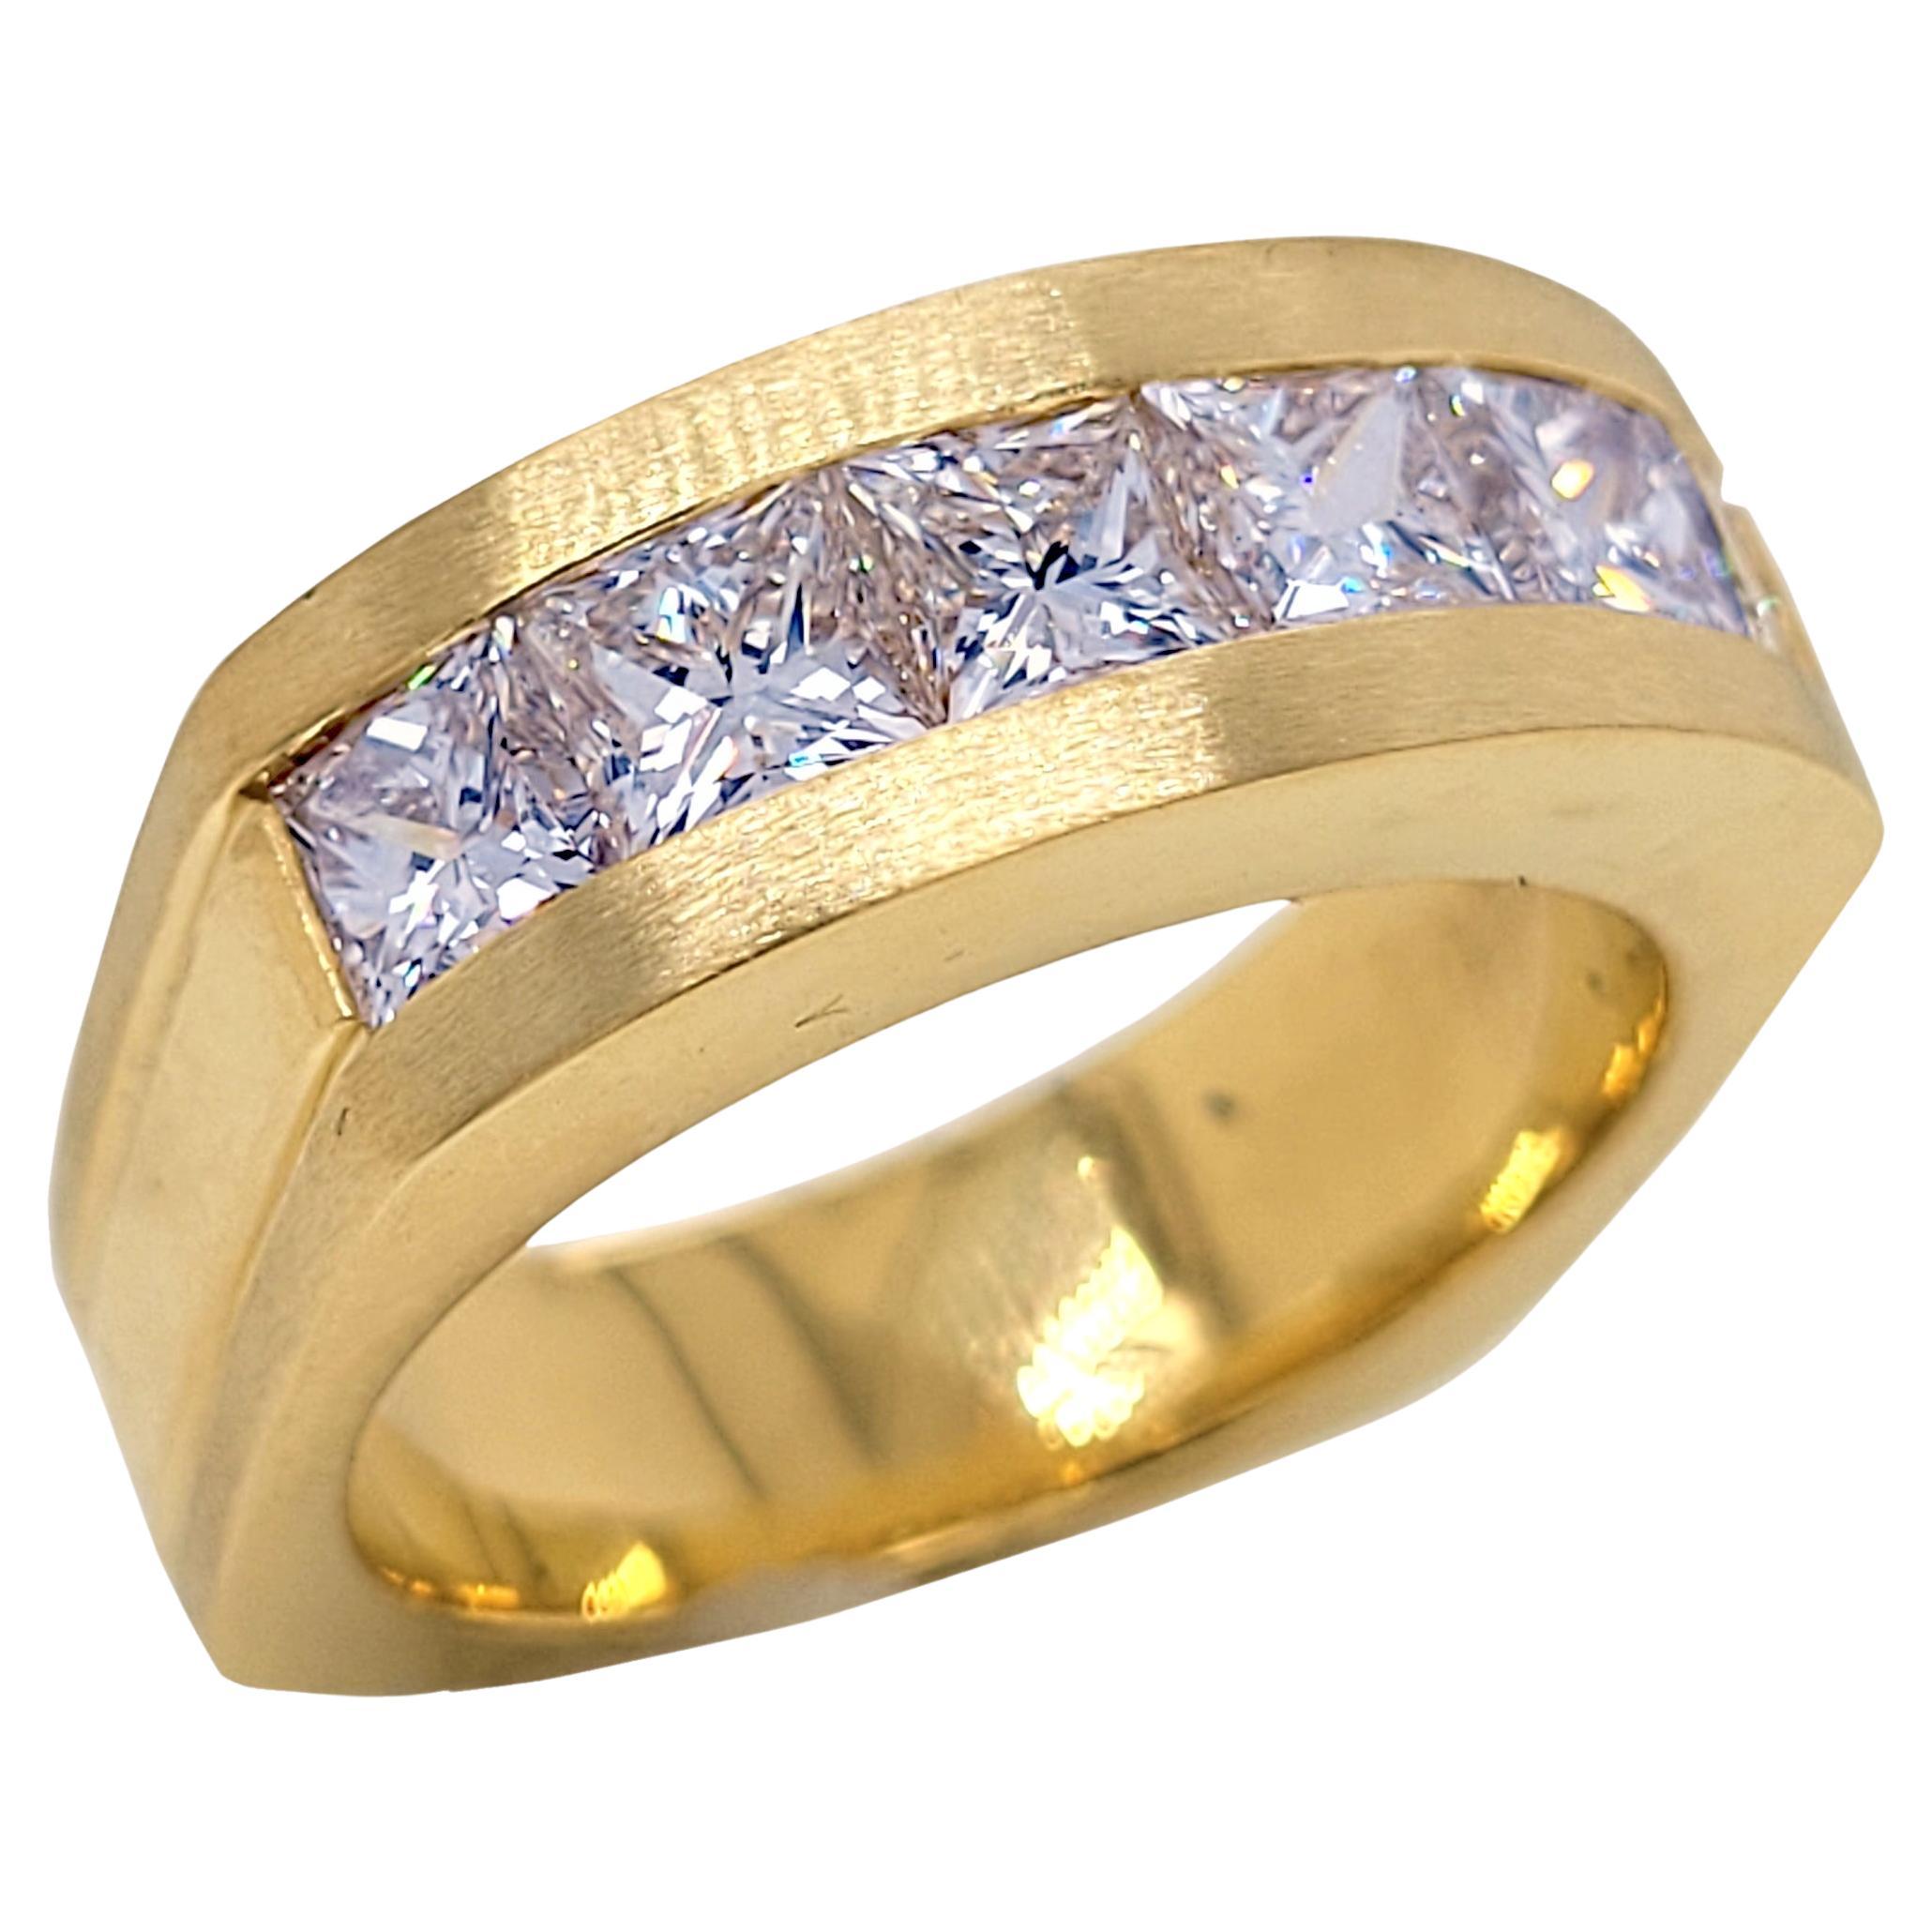 3.14 Carat Princess Cut Diamond 18 Karat Gents Ring For Sale